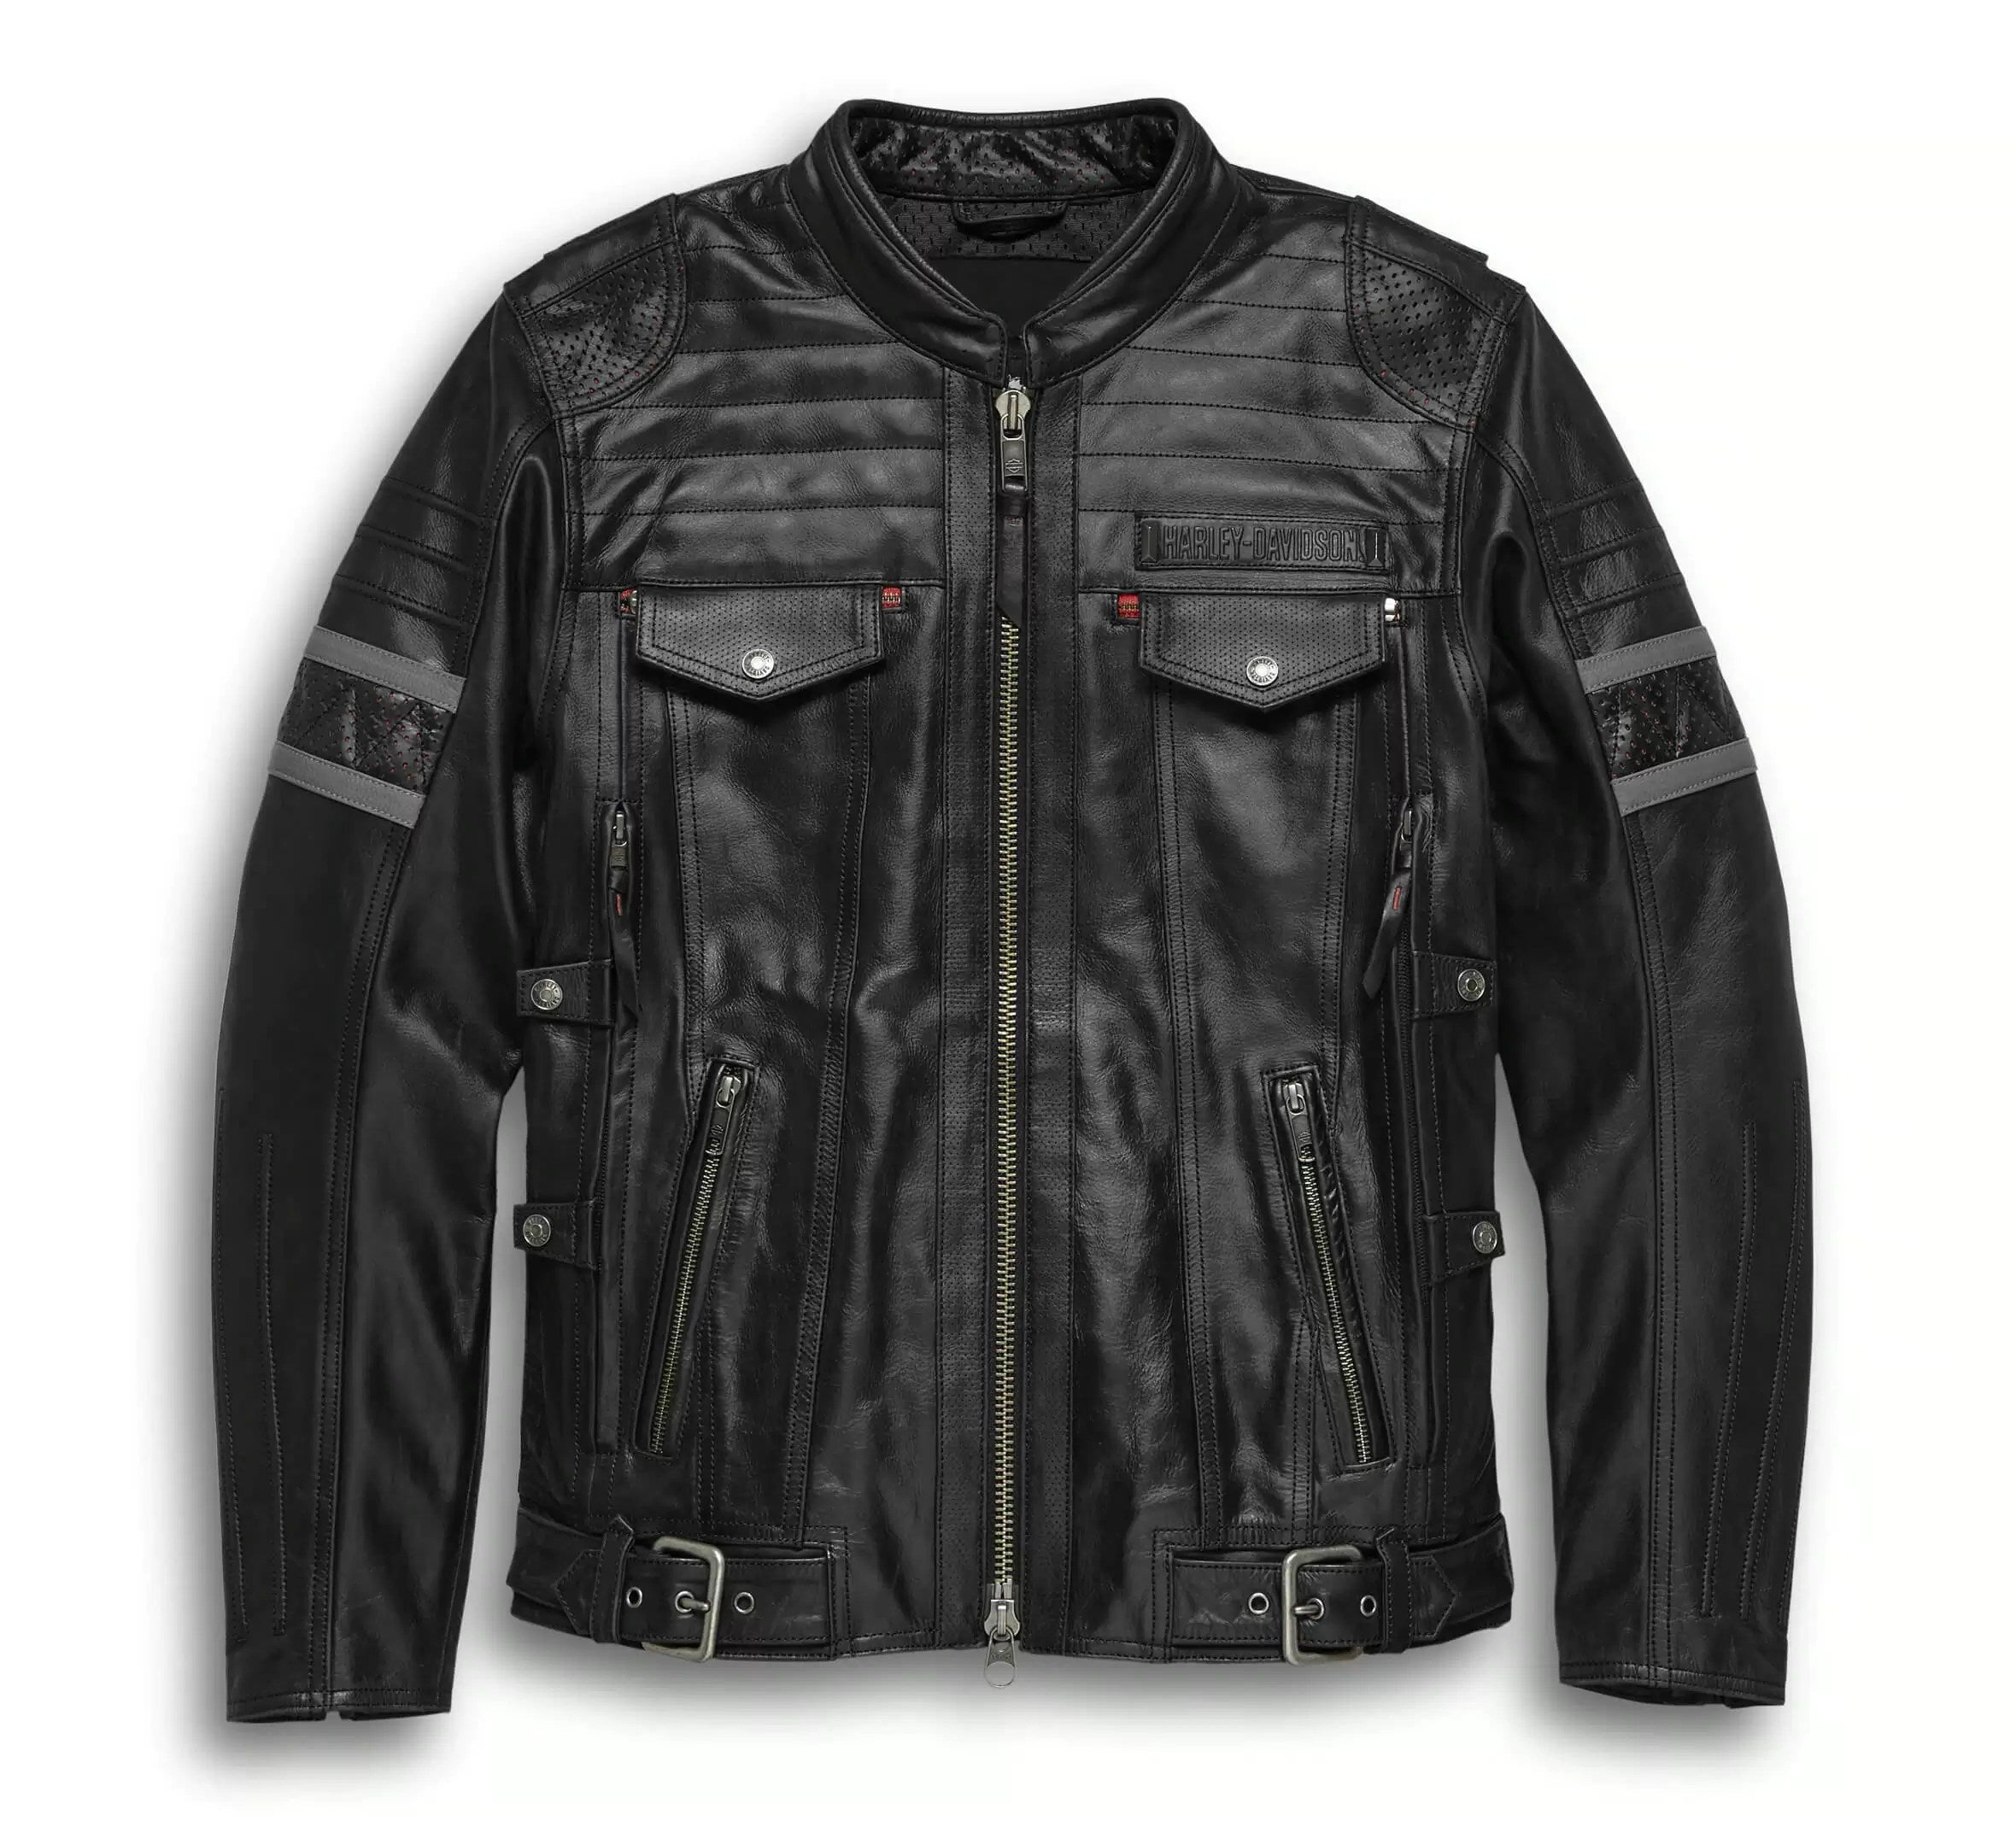 Harley Davidson Riding Black Leather Jacket